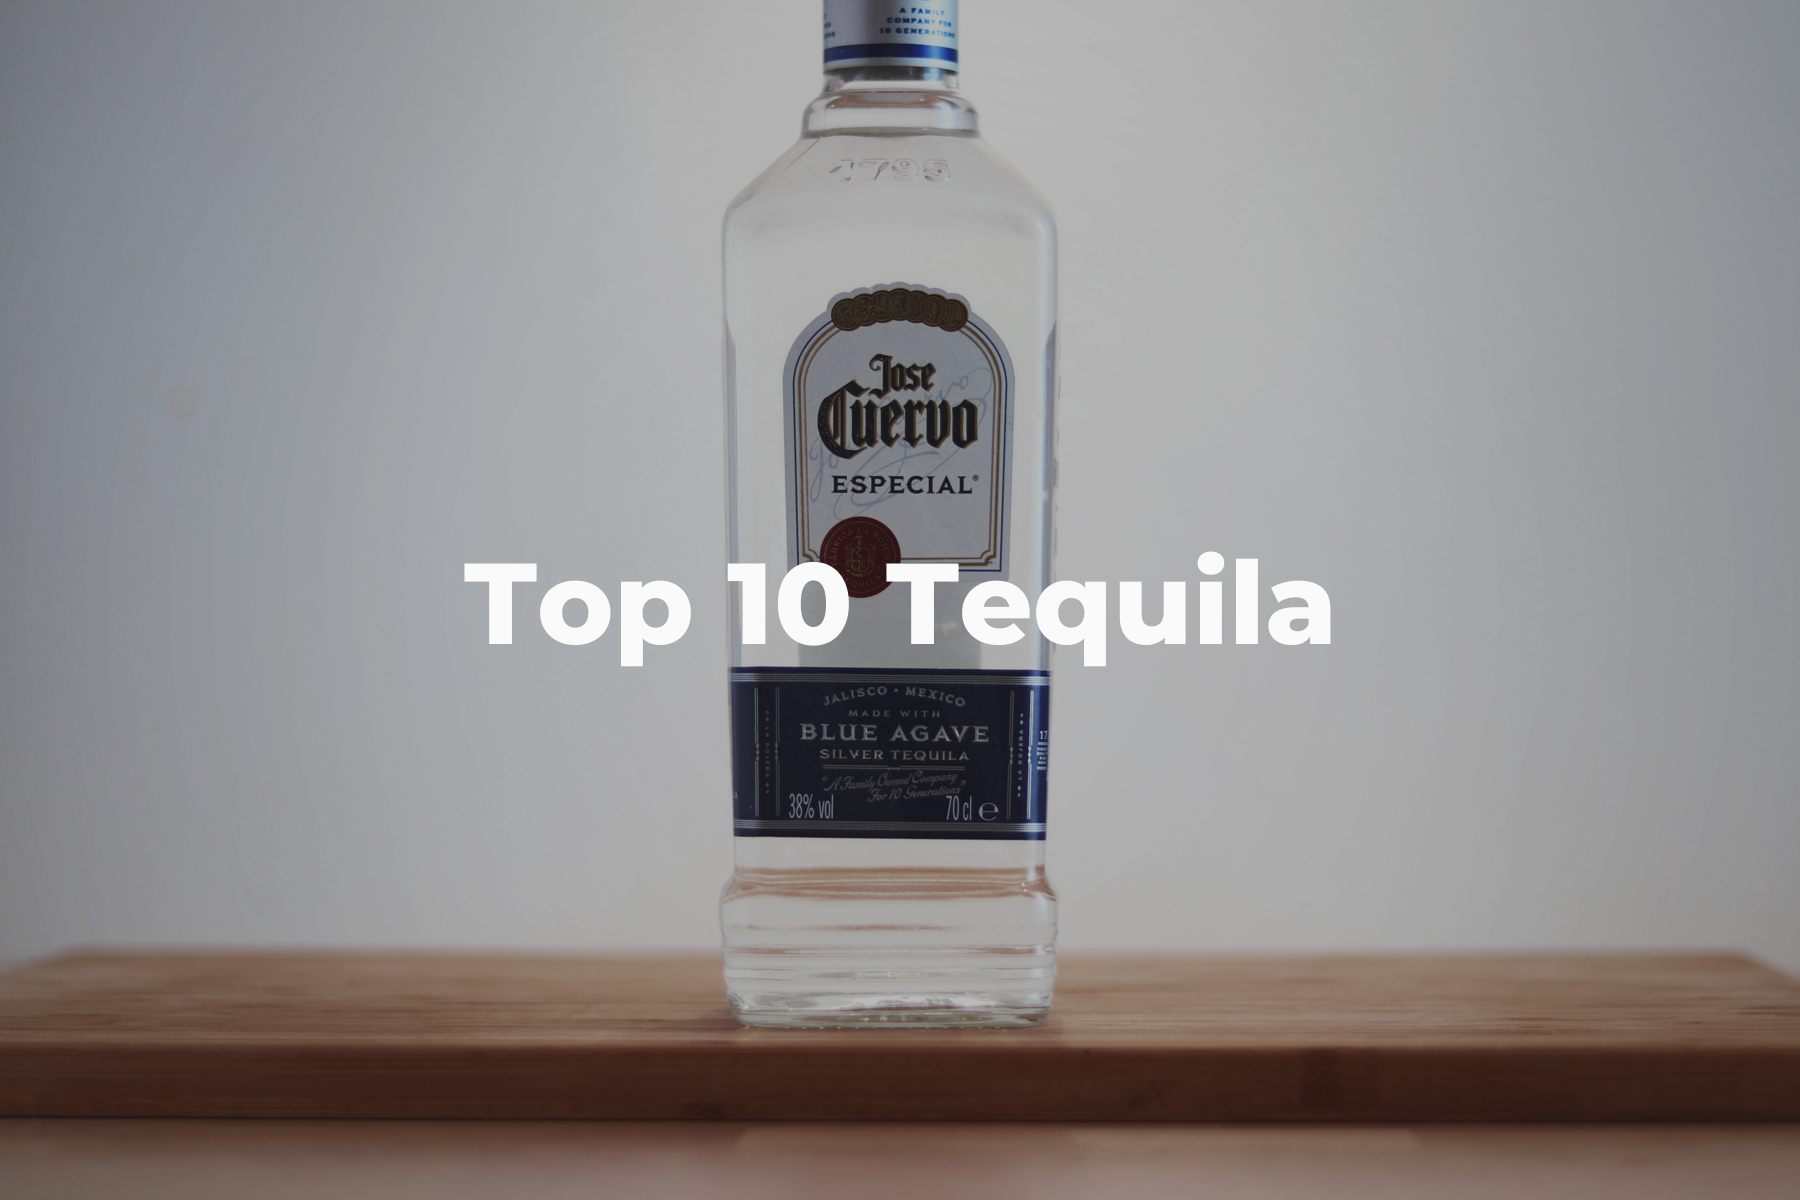 Top 10 Tequila